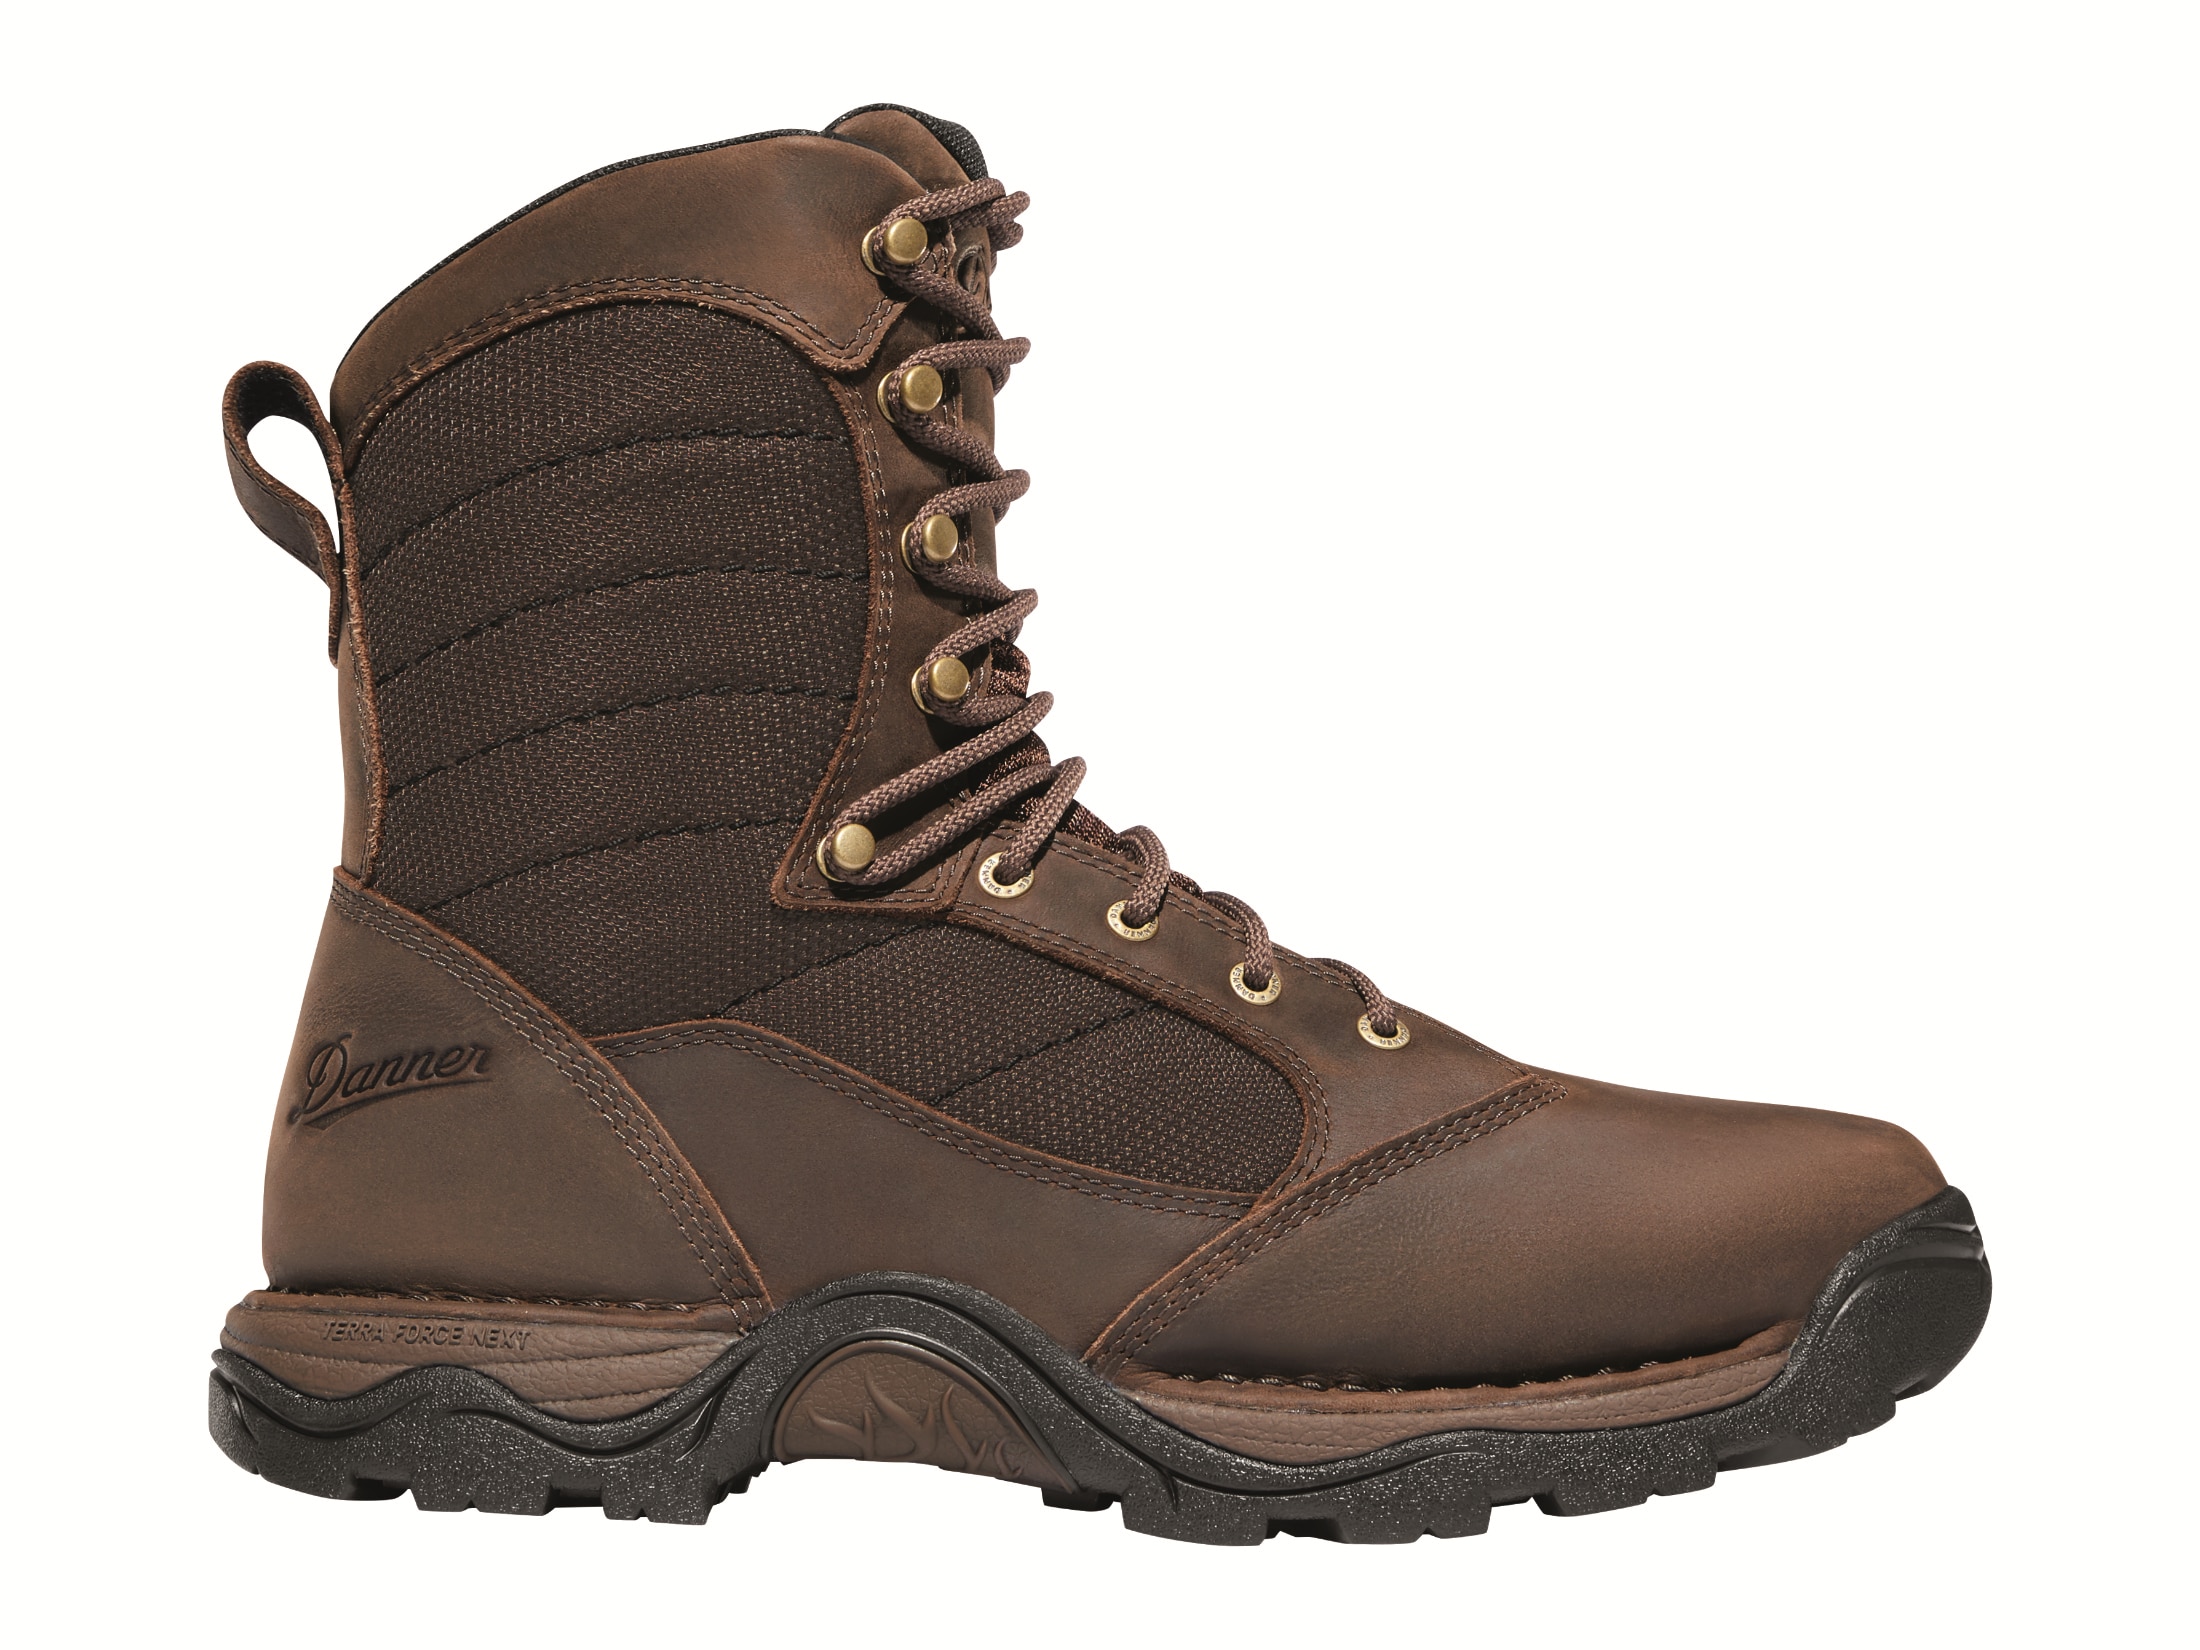 Danner Pronghorn G5 8 Hunting Boots Full-Grain Leather Brown Men's 8.5